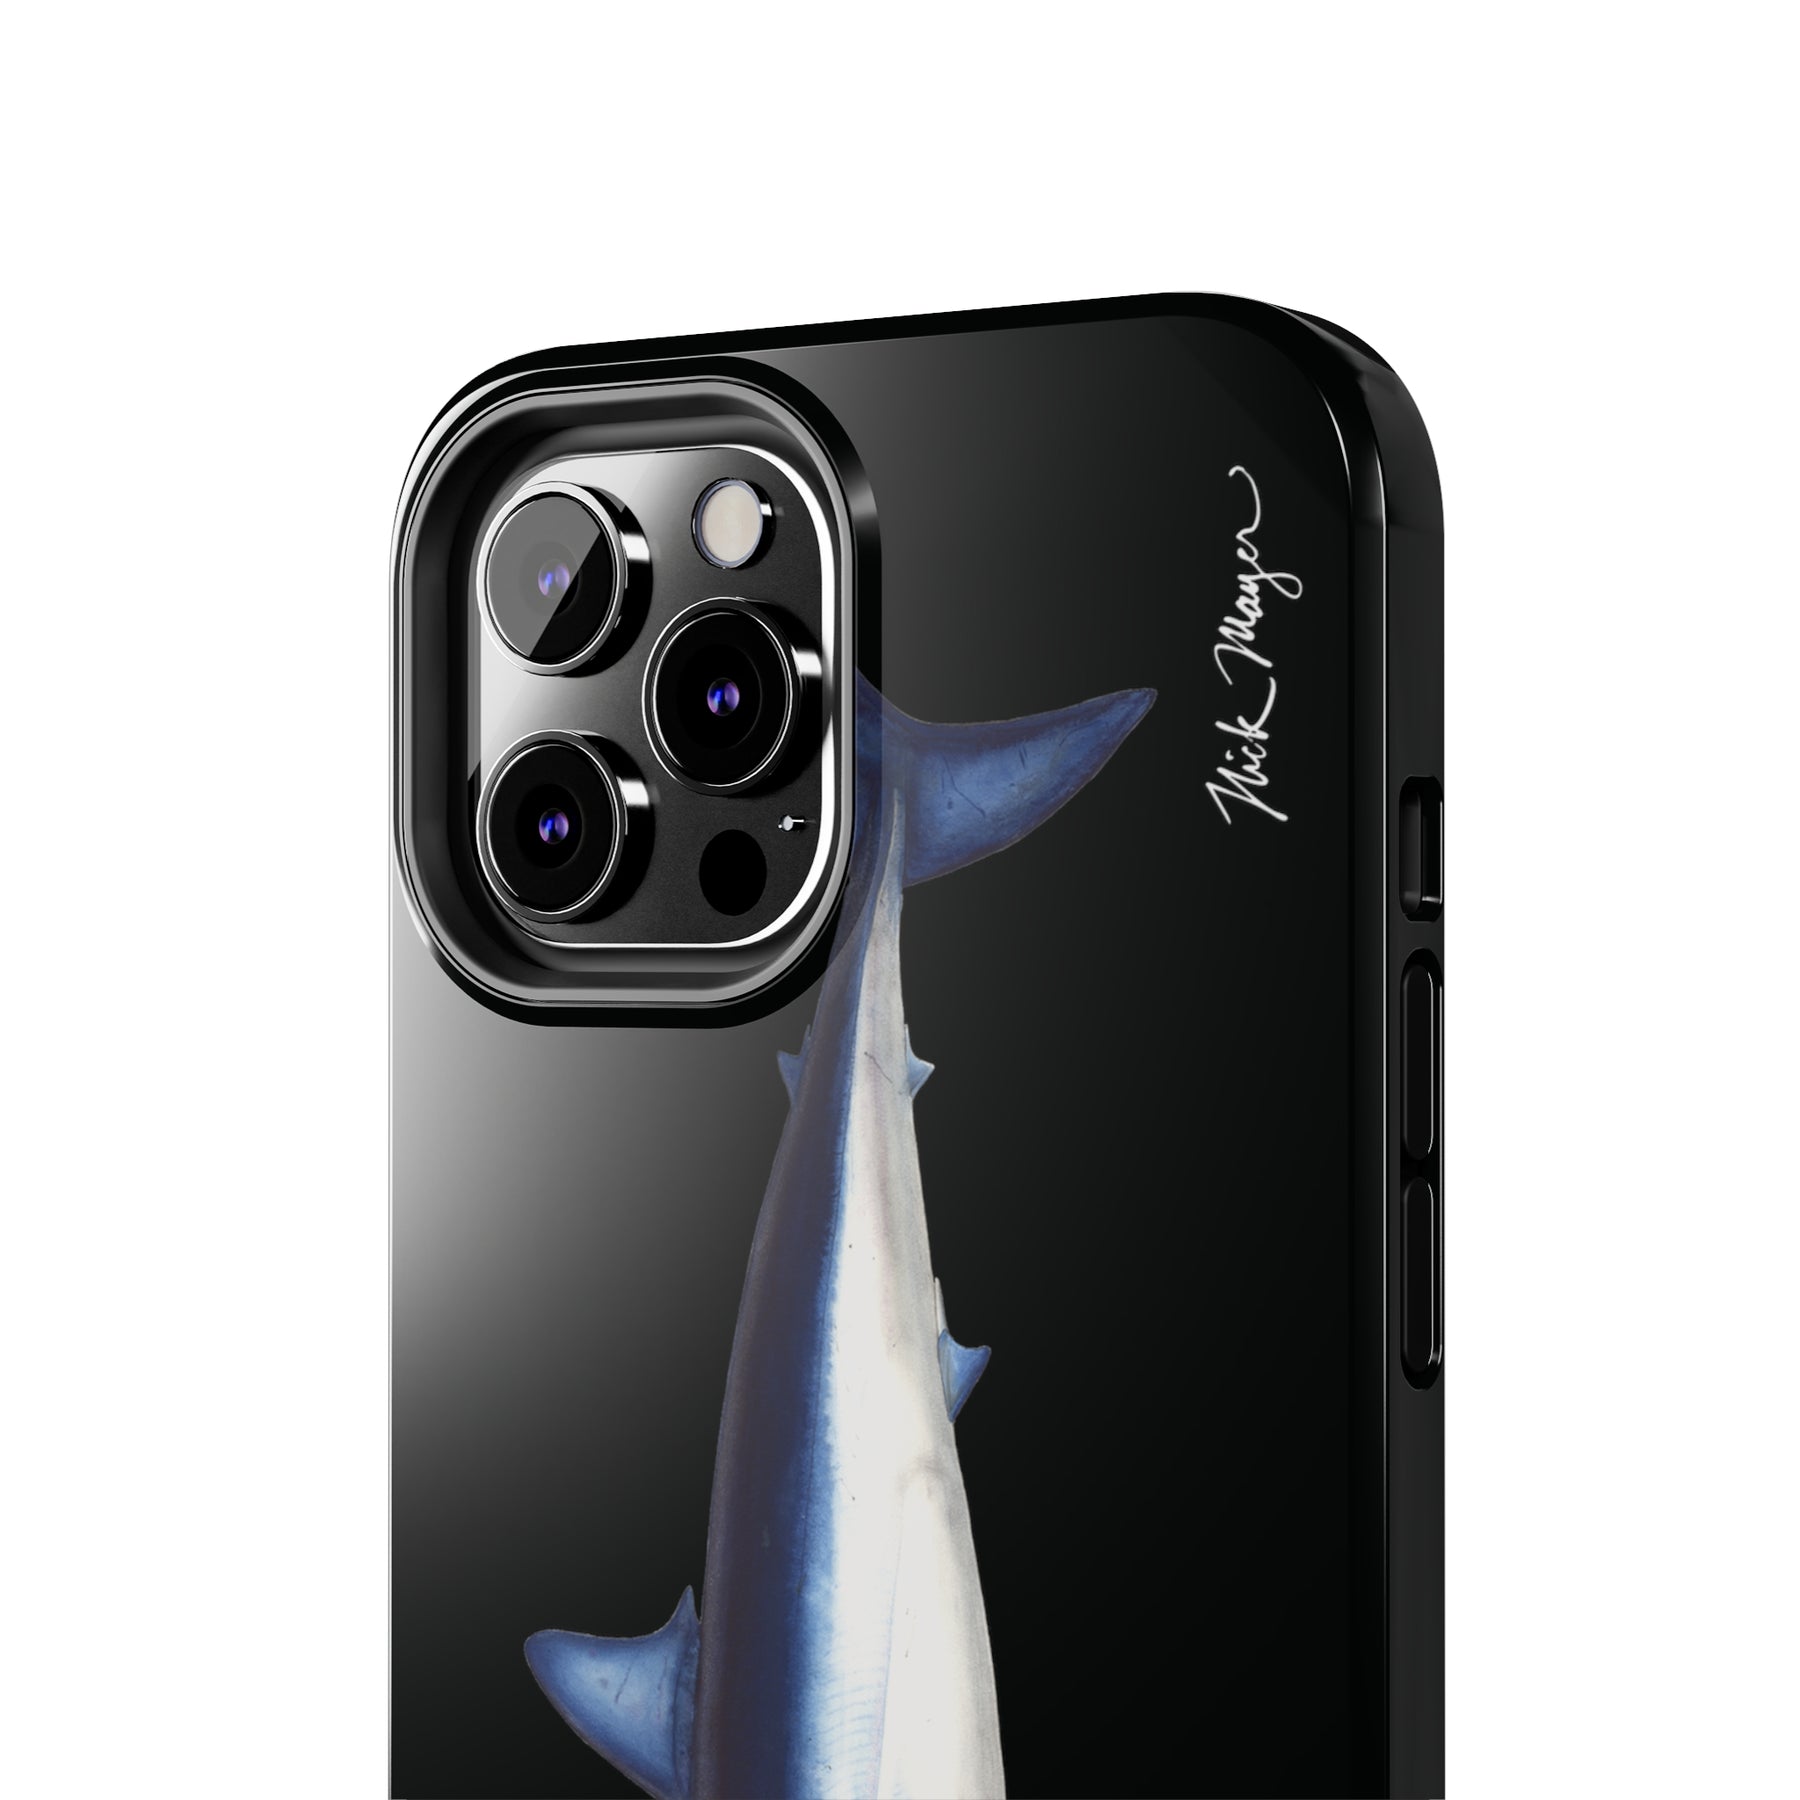 Mako Shark Black iPhone Case